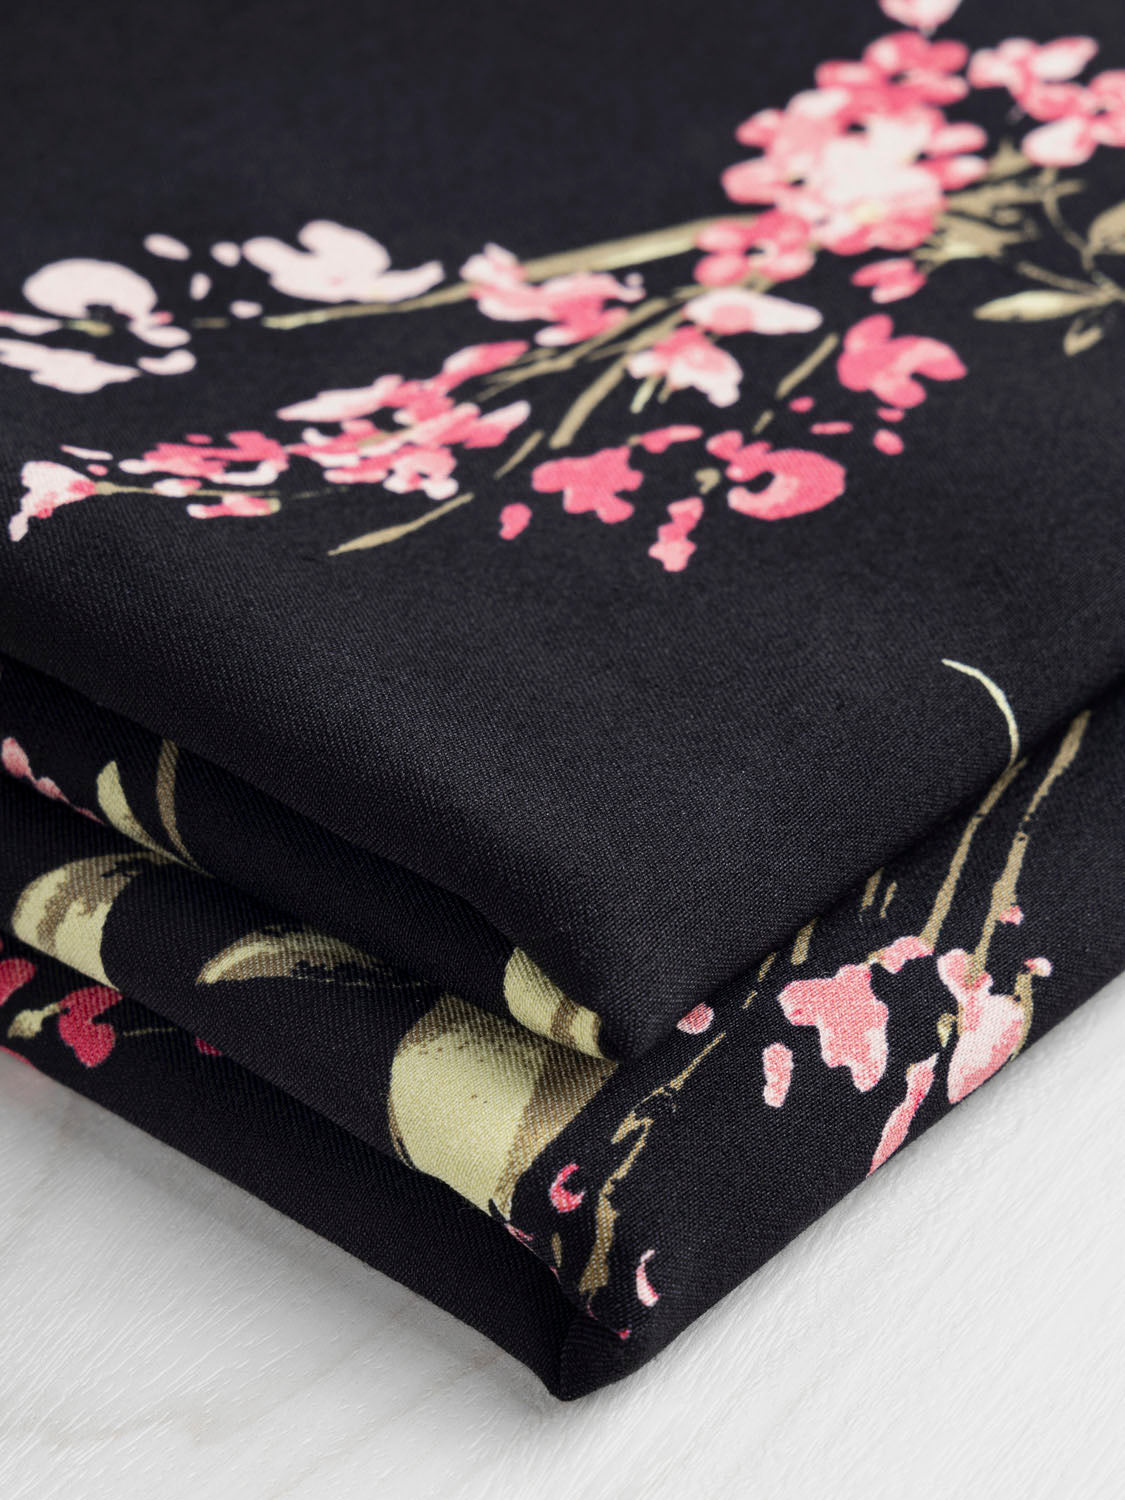 Floral Print Stretch Viscose Twill Deadstock - Rose + Moss + Black | Core Fabrics